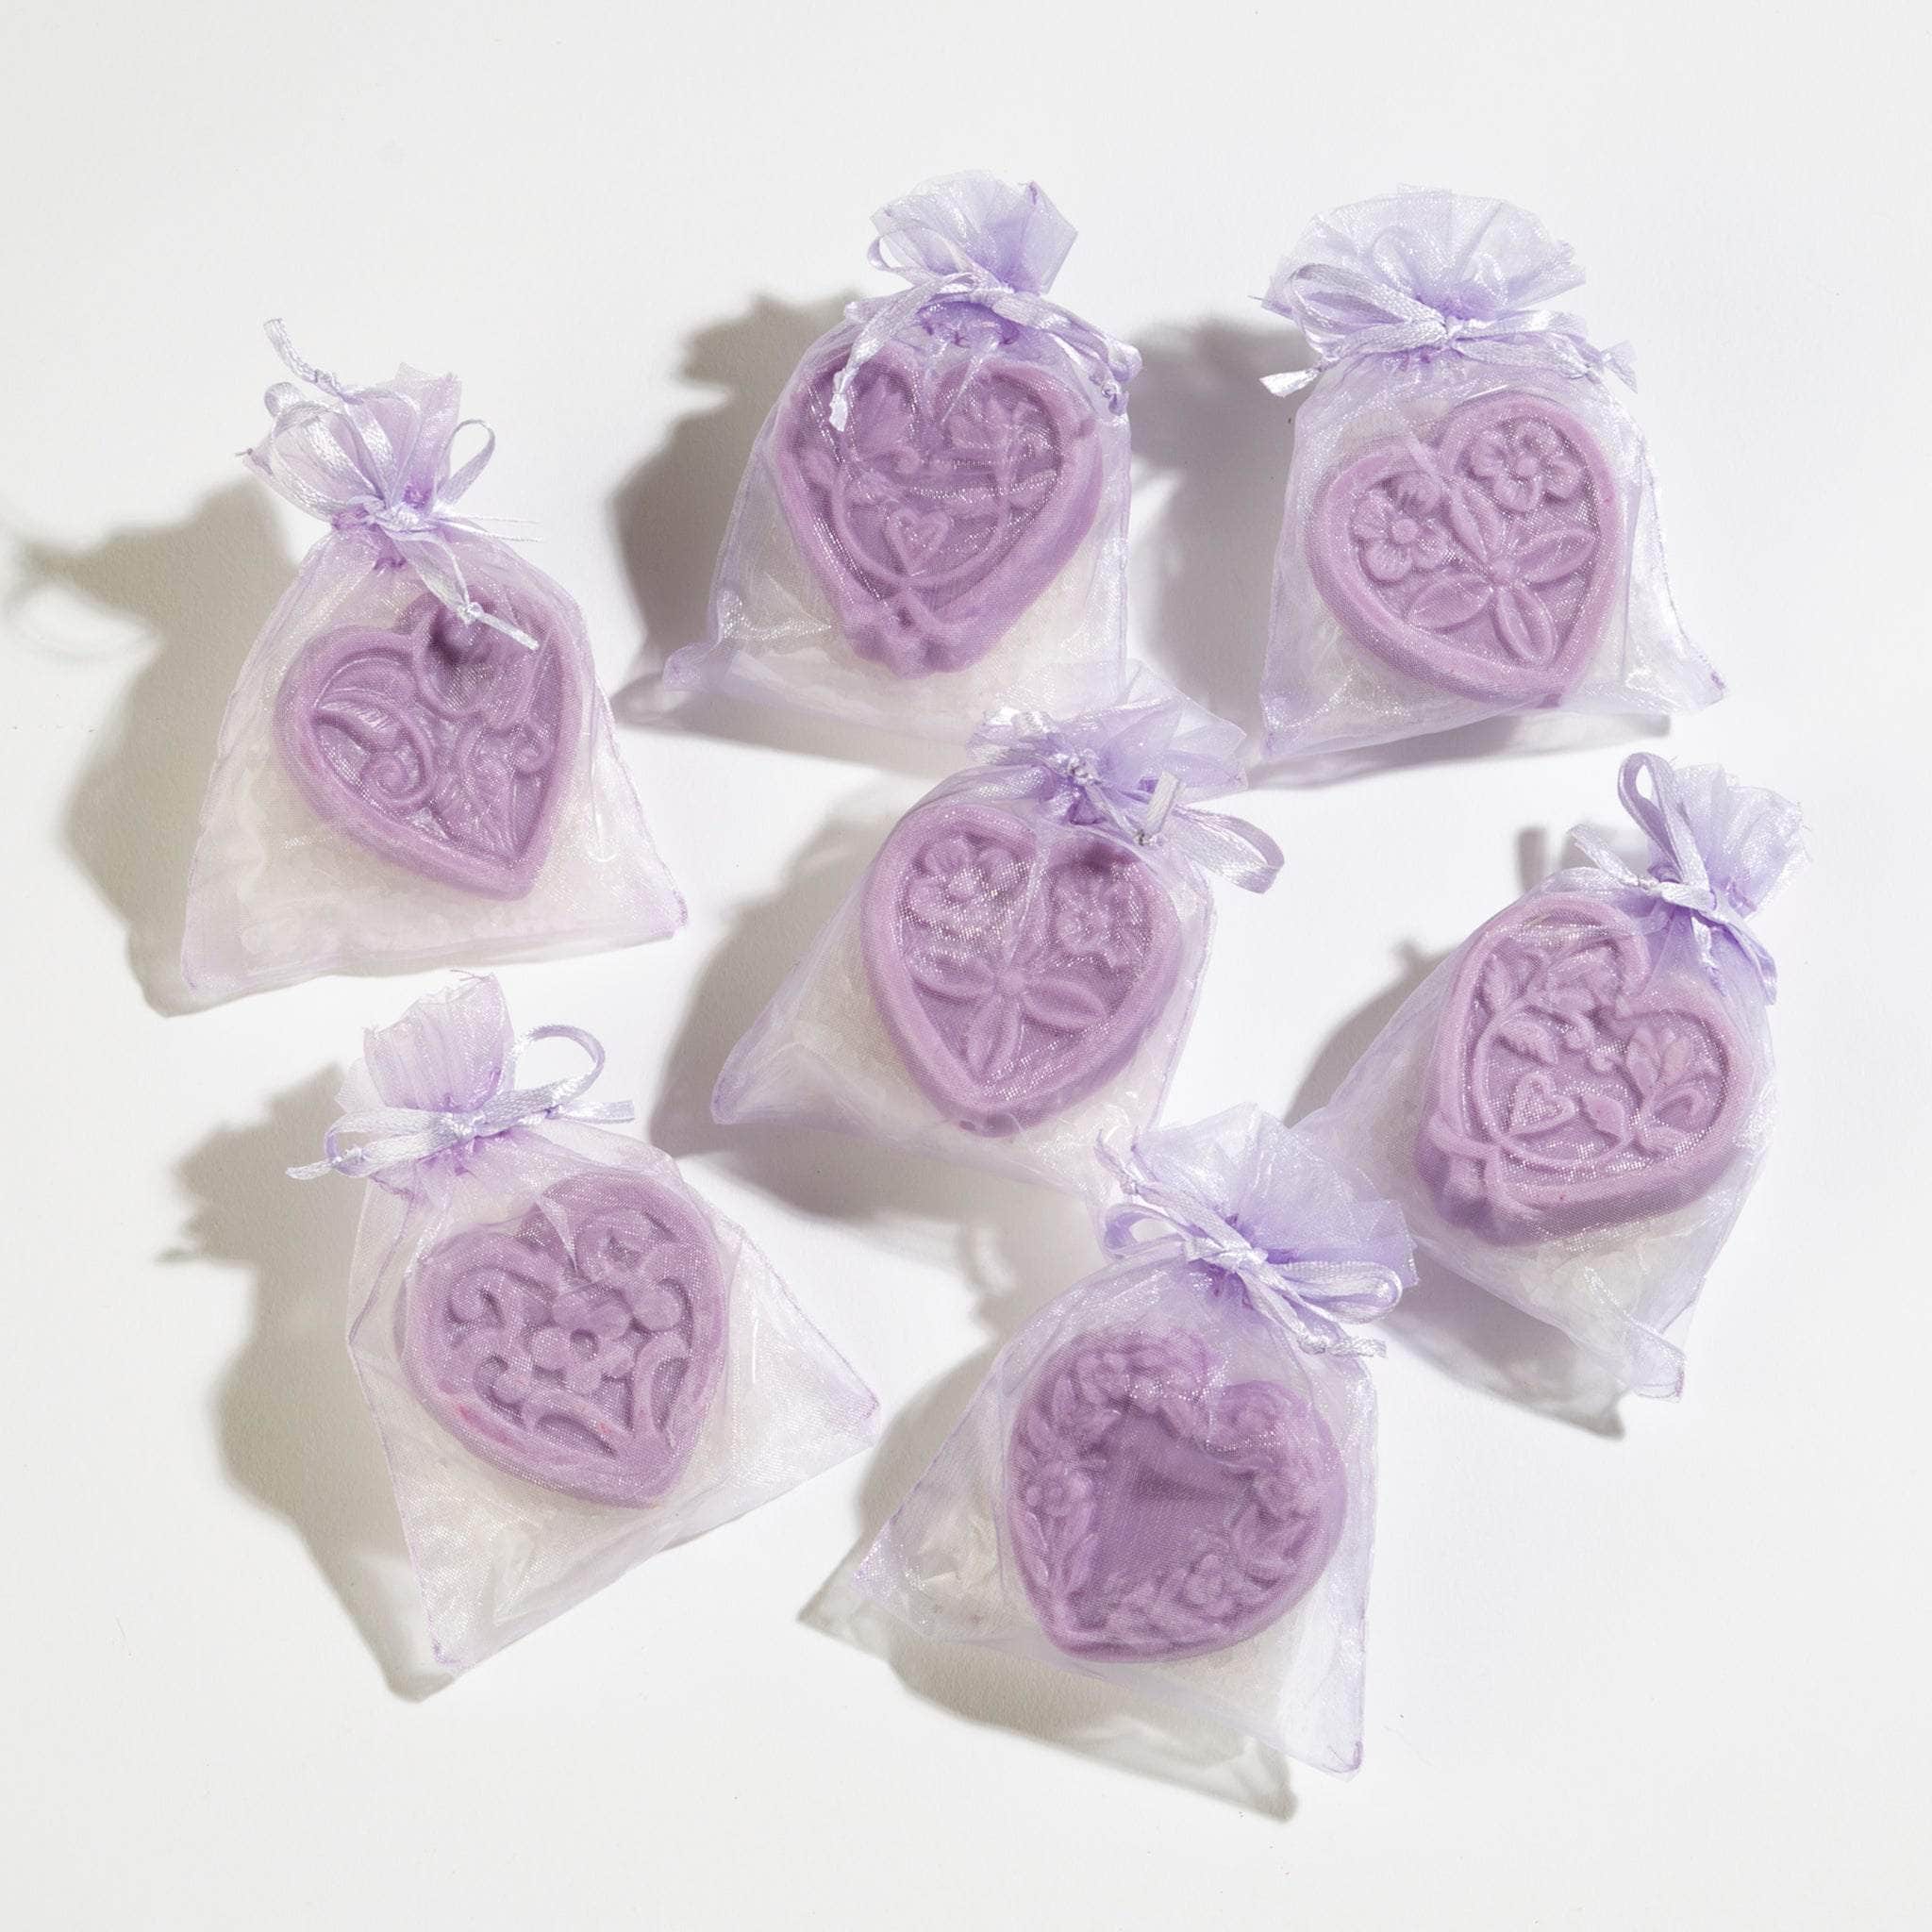 Lavender Bath Salt and Soap Mini - Set of 25